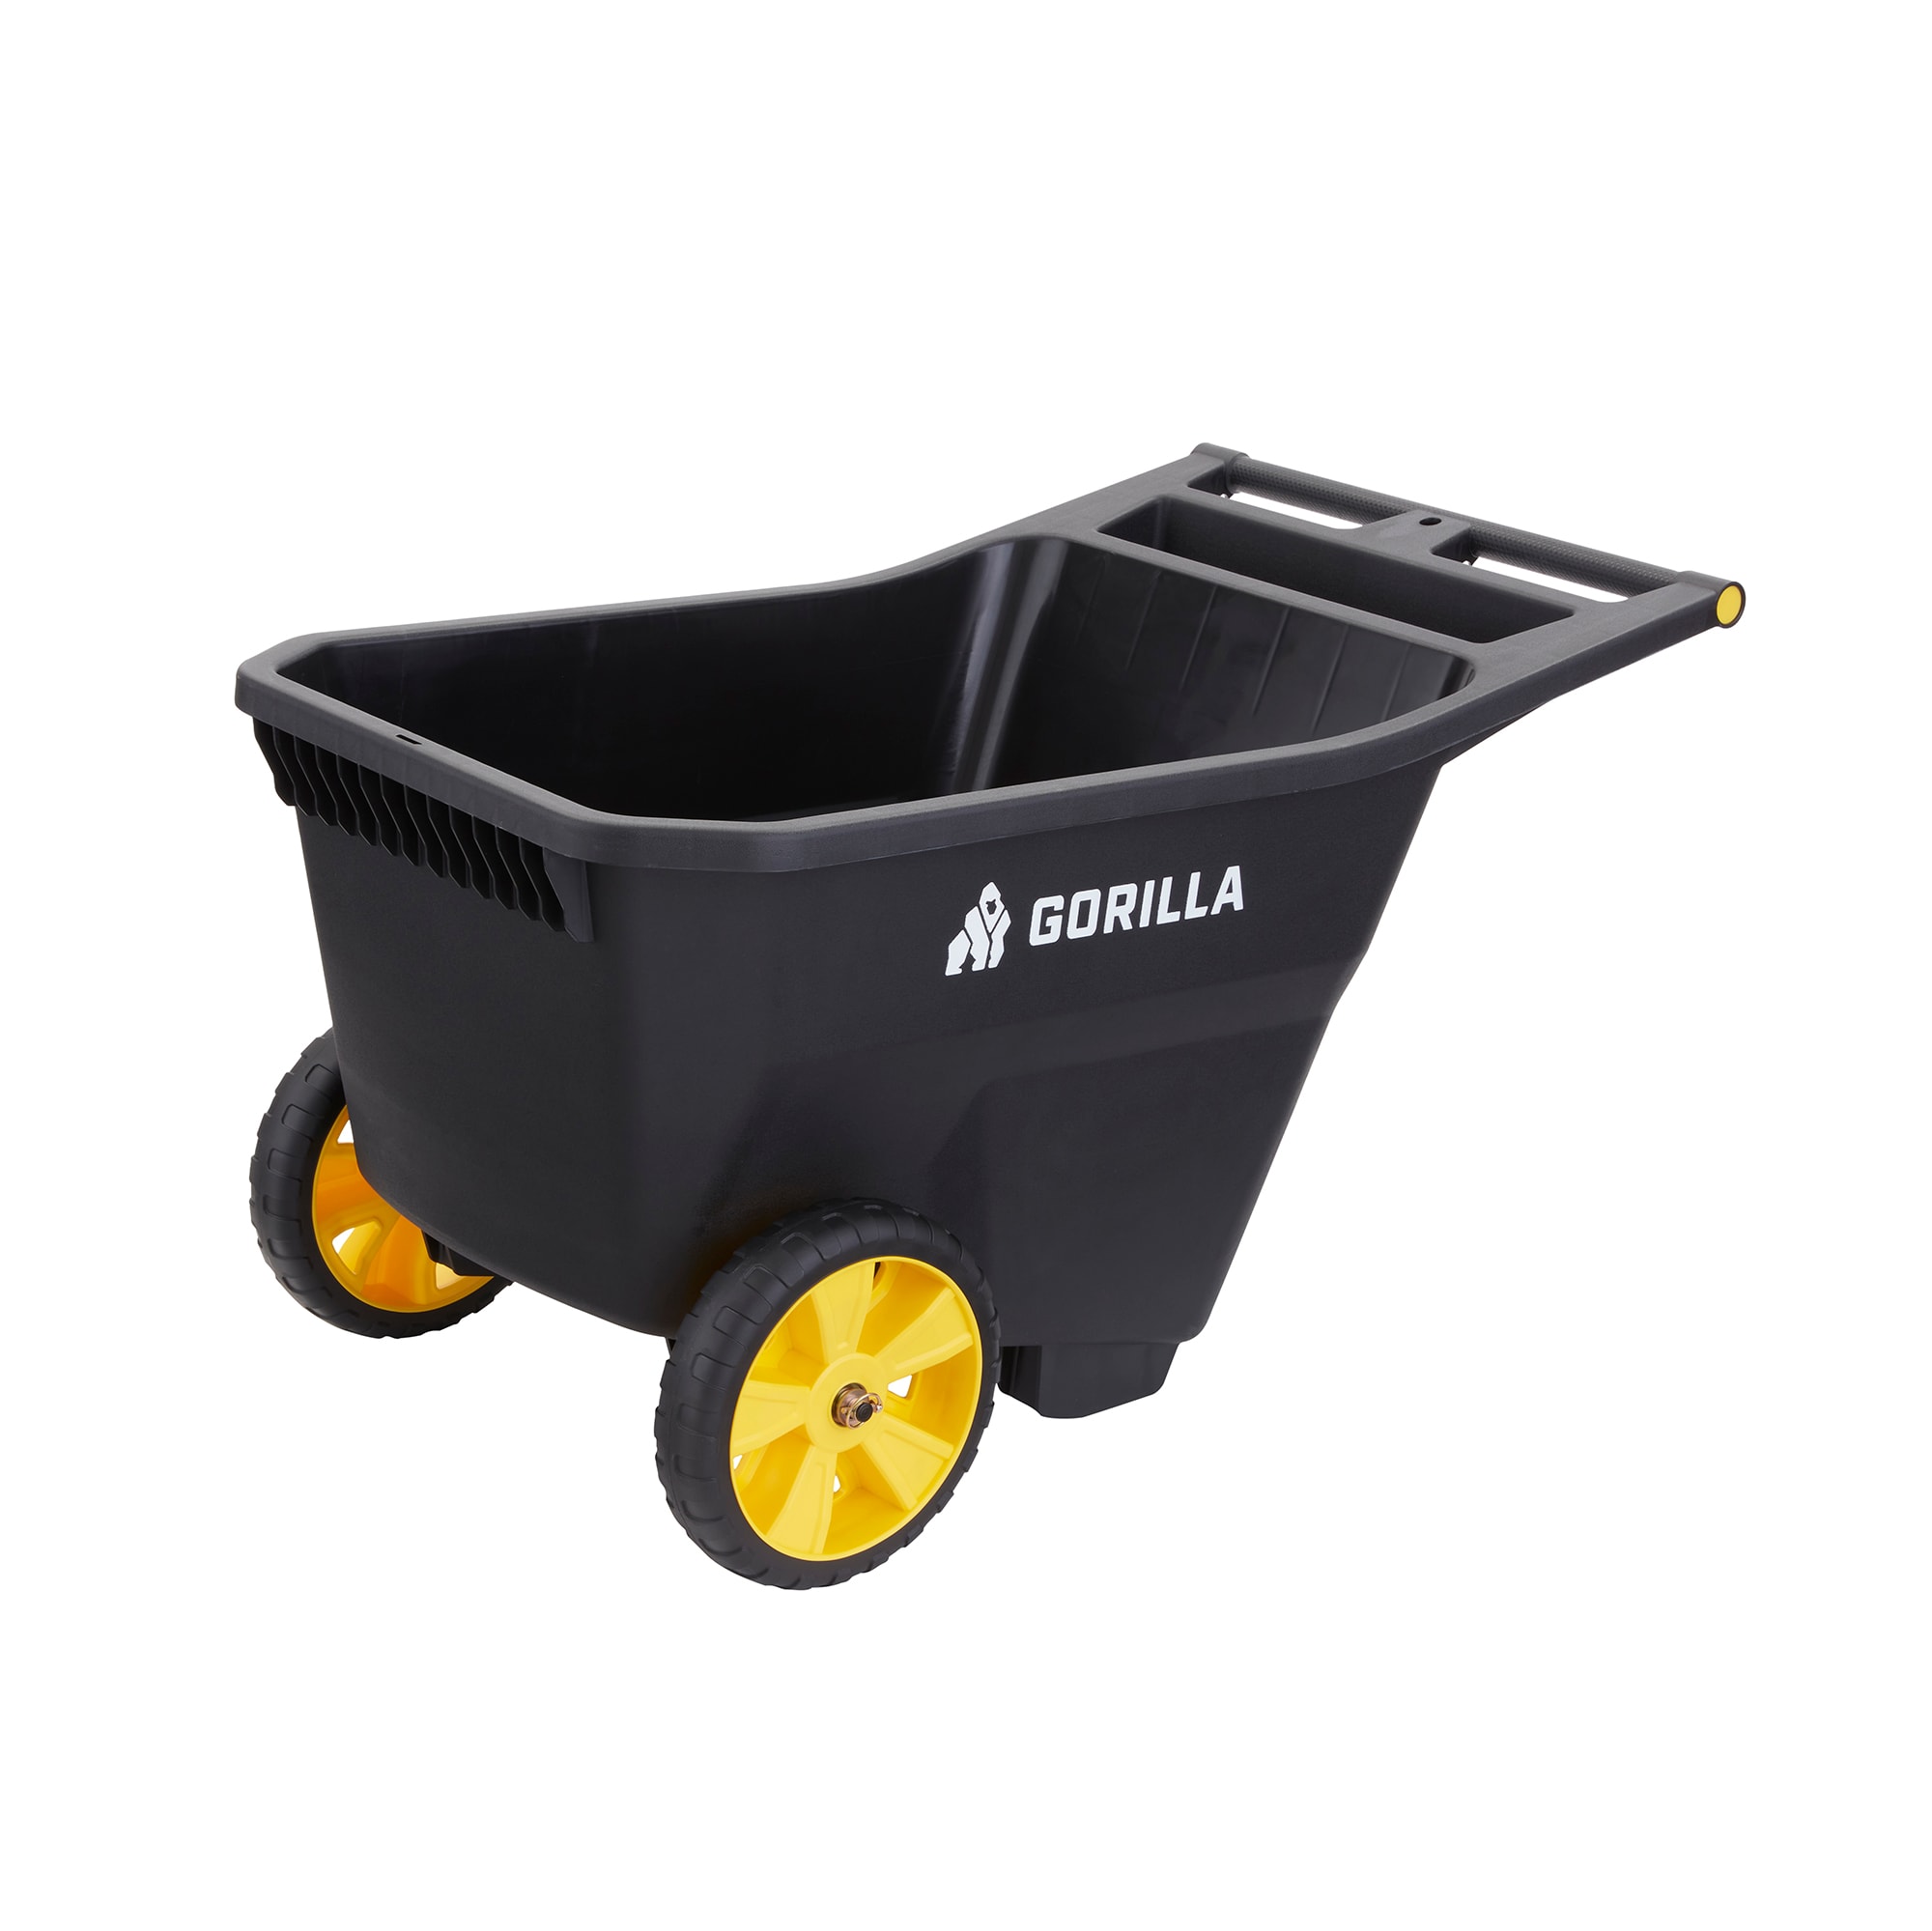 Gorilla Carts Steel Utility Cart 600 Pound Capacity